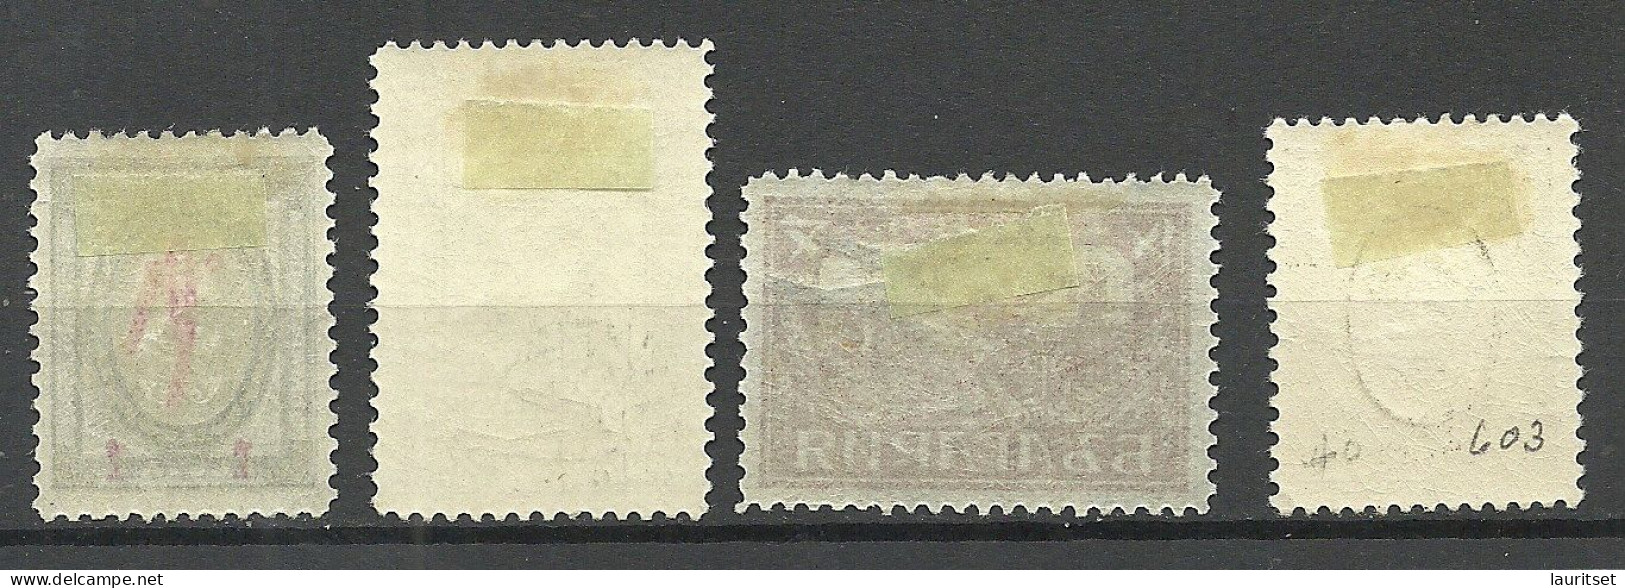 BULGARIA Bulgarien 1927/28 Michel 206 - 206 * - Poste Aérienne